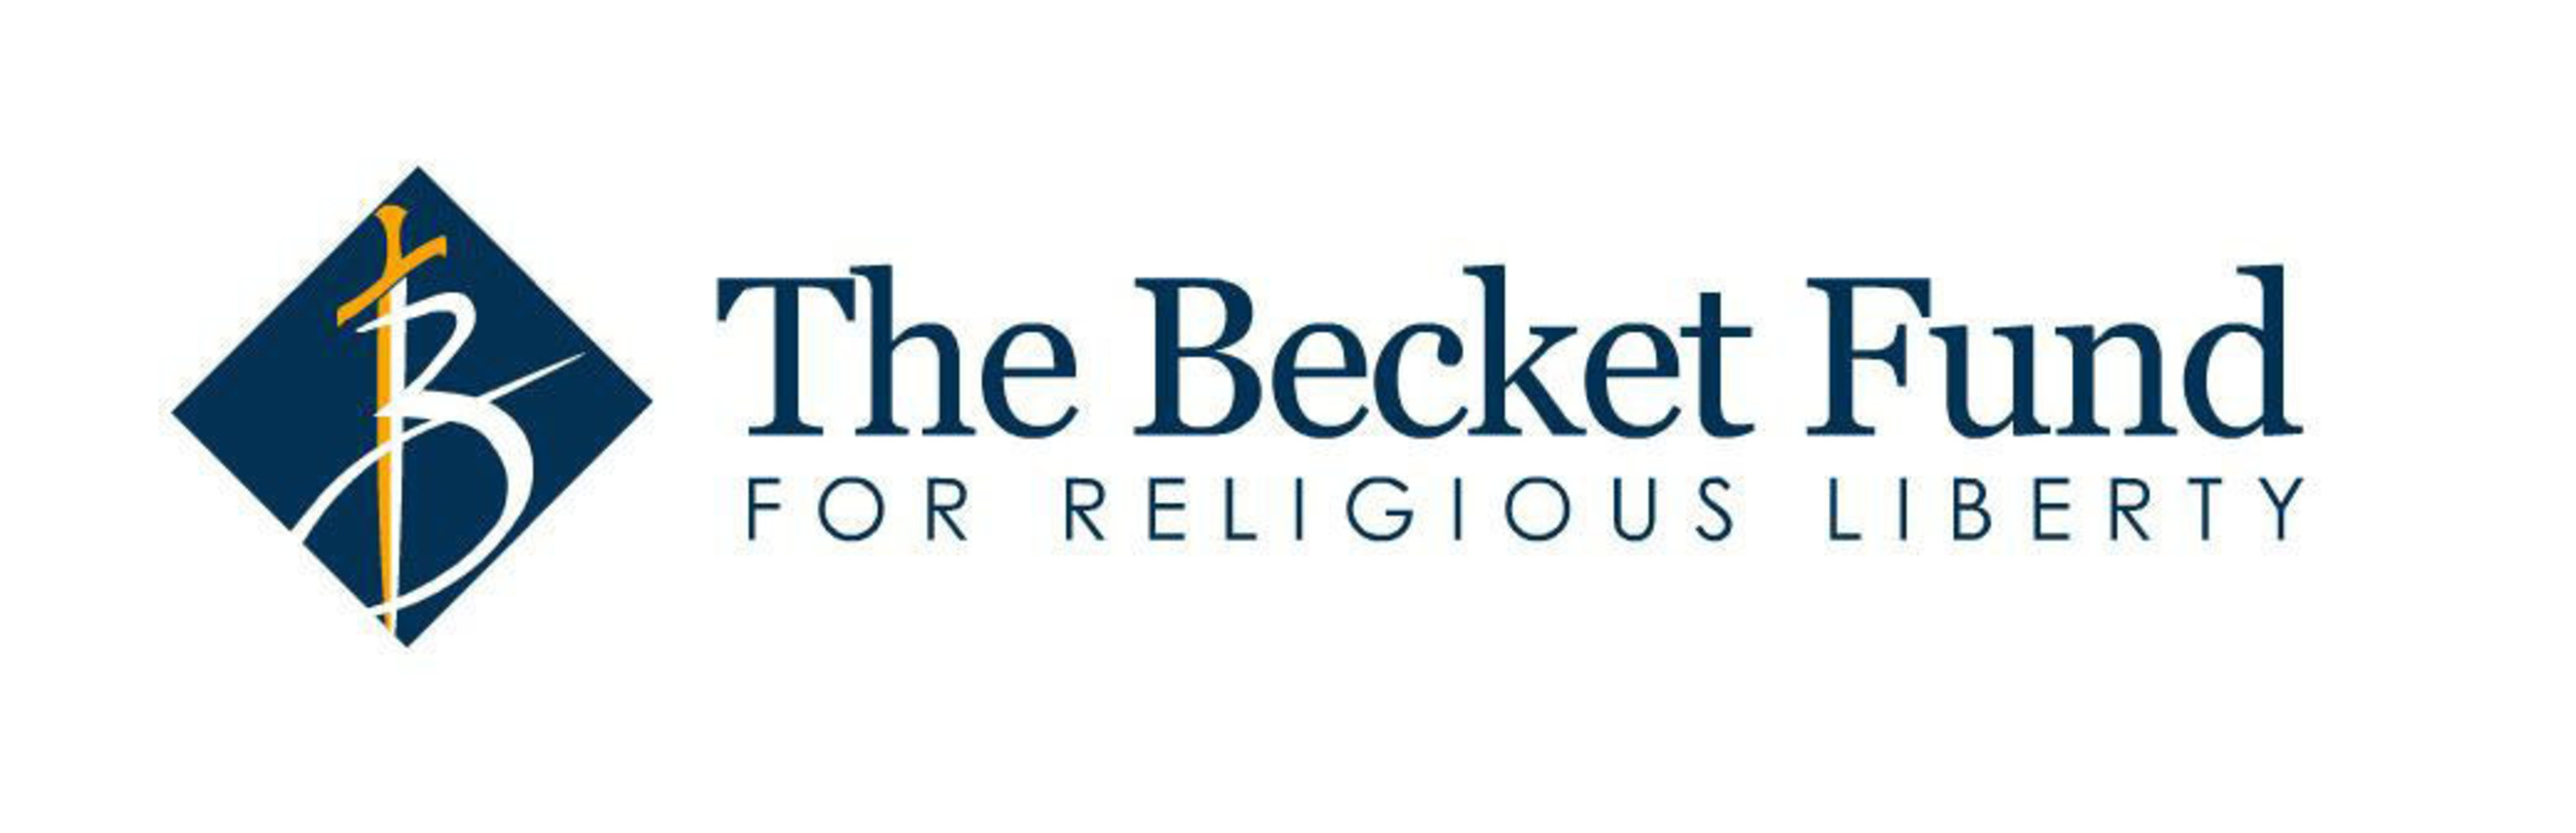 Becket Fund for Religious Liberty Logo